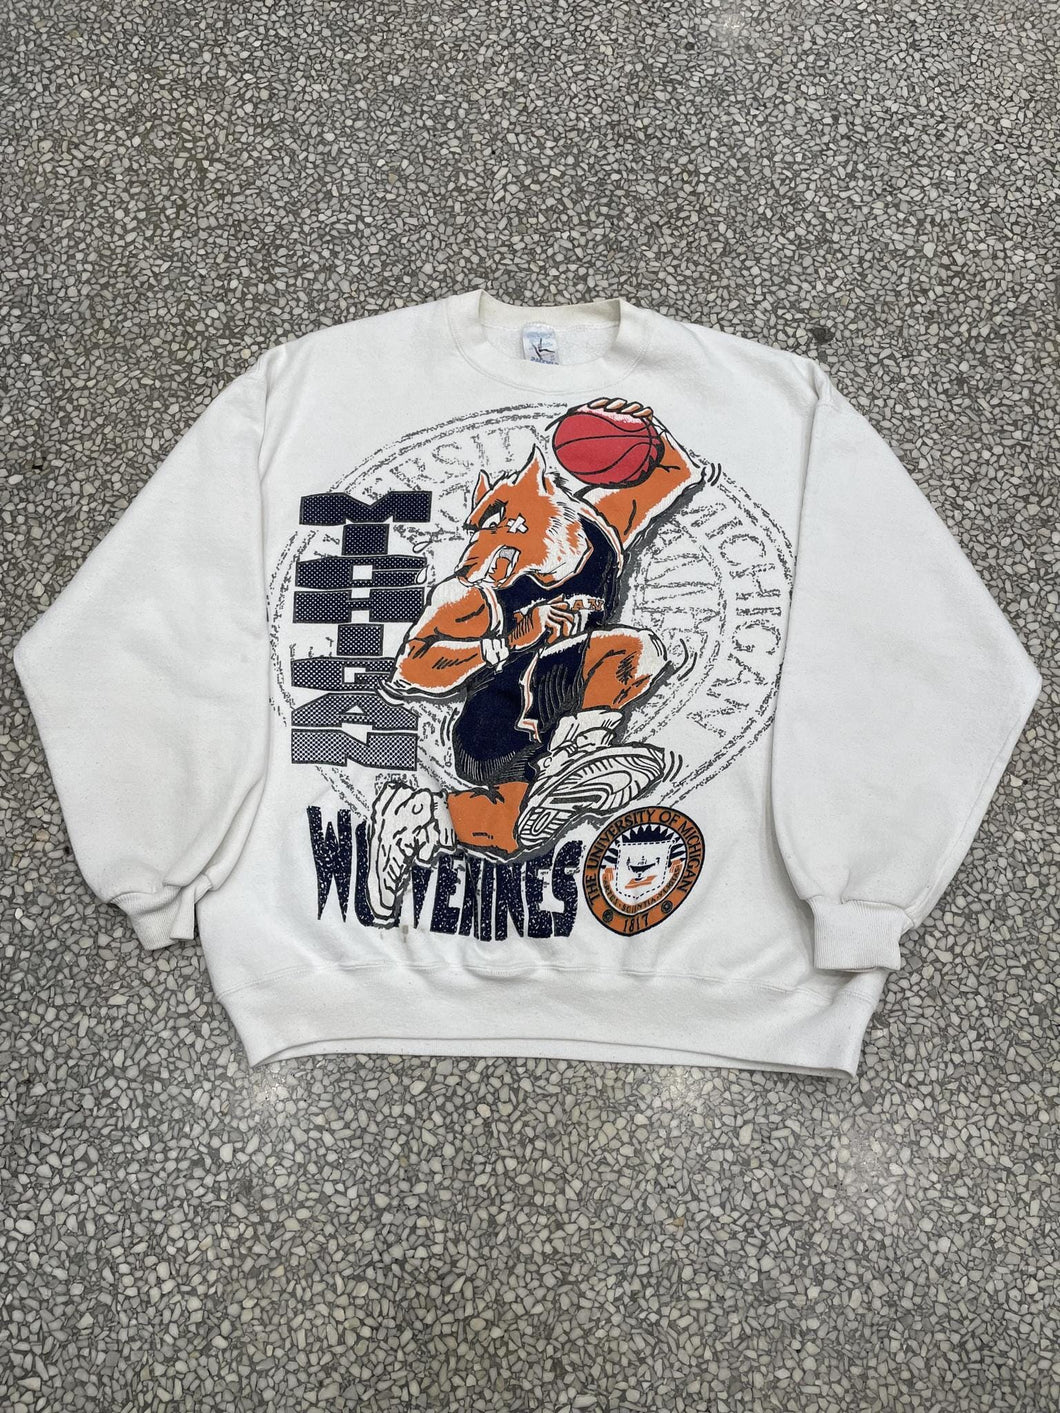 Michigan Wolverines Vintage 90s Basketball Crewneck Faded White ABC Vintage 